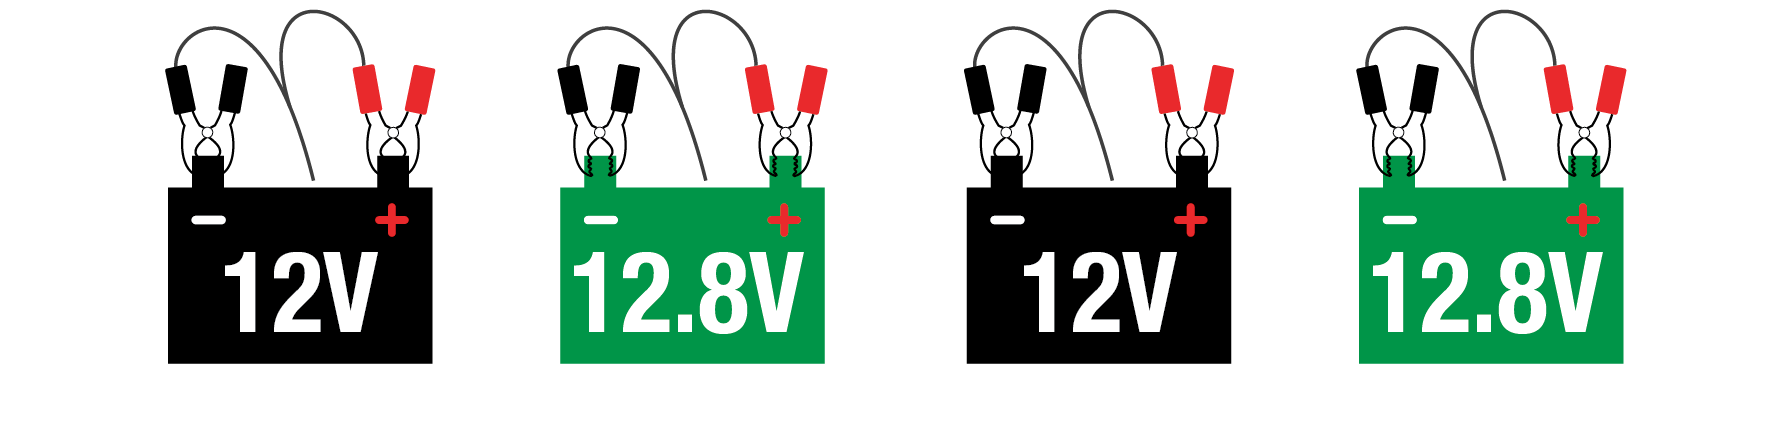  4 baterías de plomo-ácido de 12 V (STD, AGM, GEL) / LFP de litio de 13,2 V (LiFePO4) 